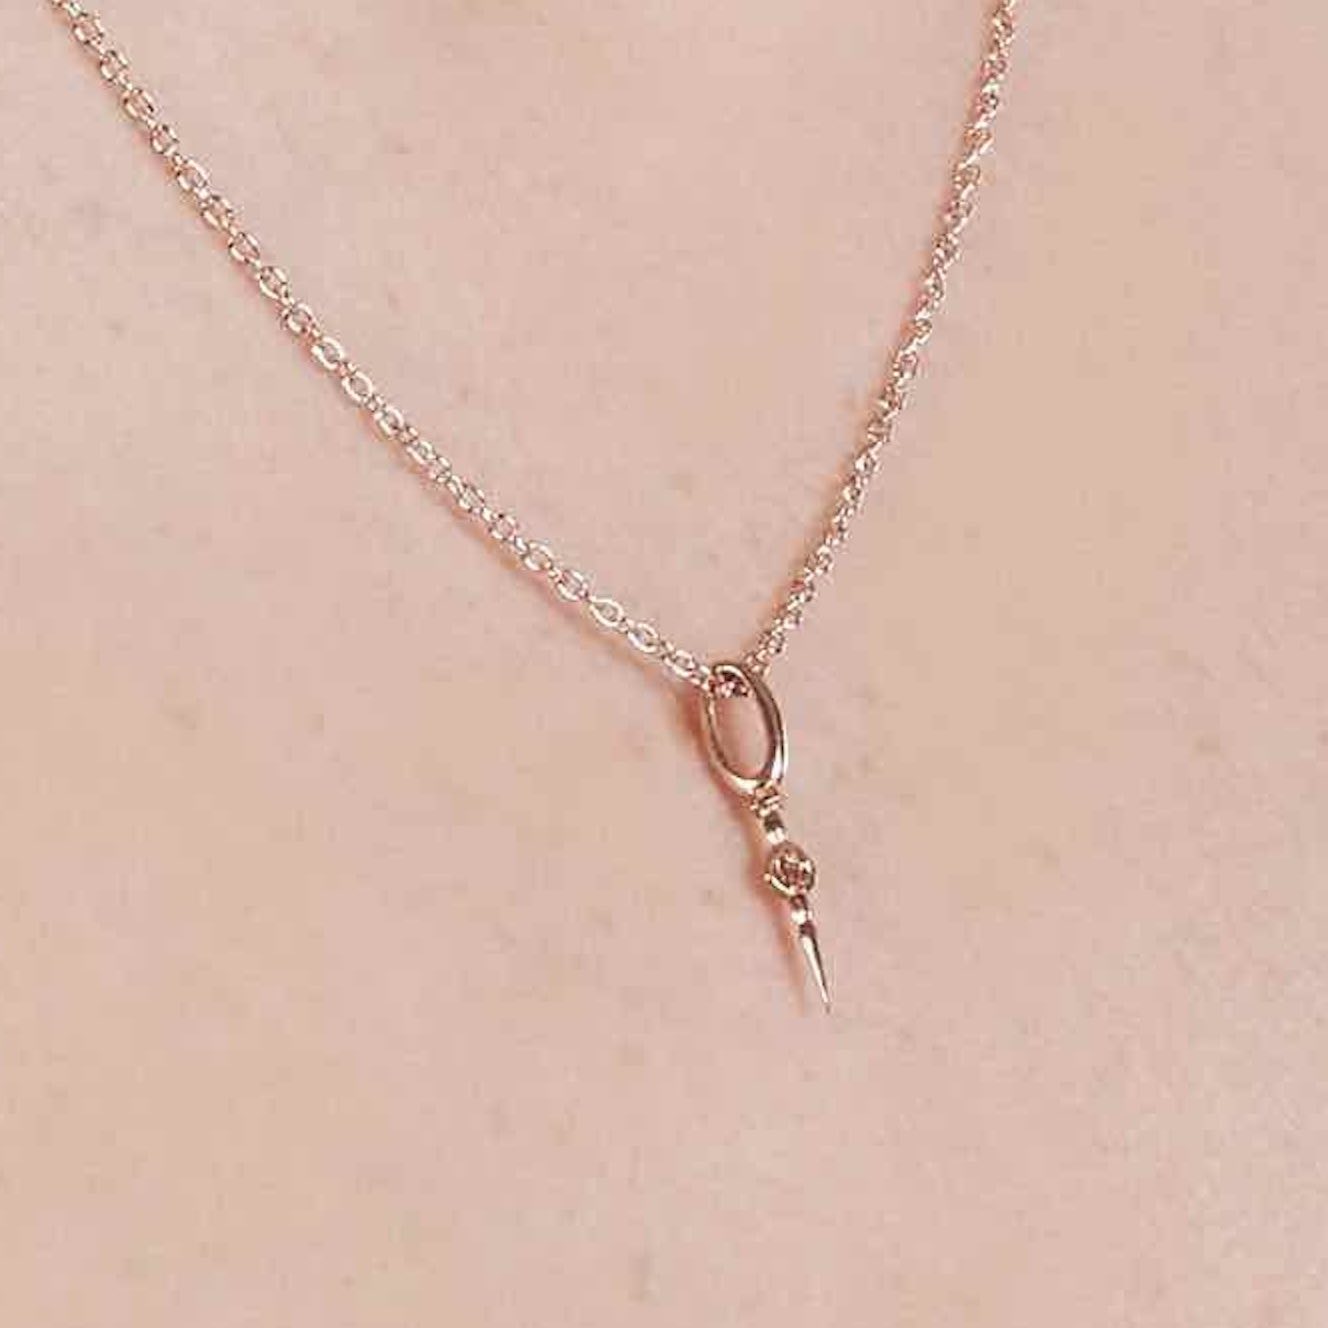 Soldiser Freya Mini Rose Gold Necklace on model zoomed in